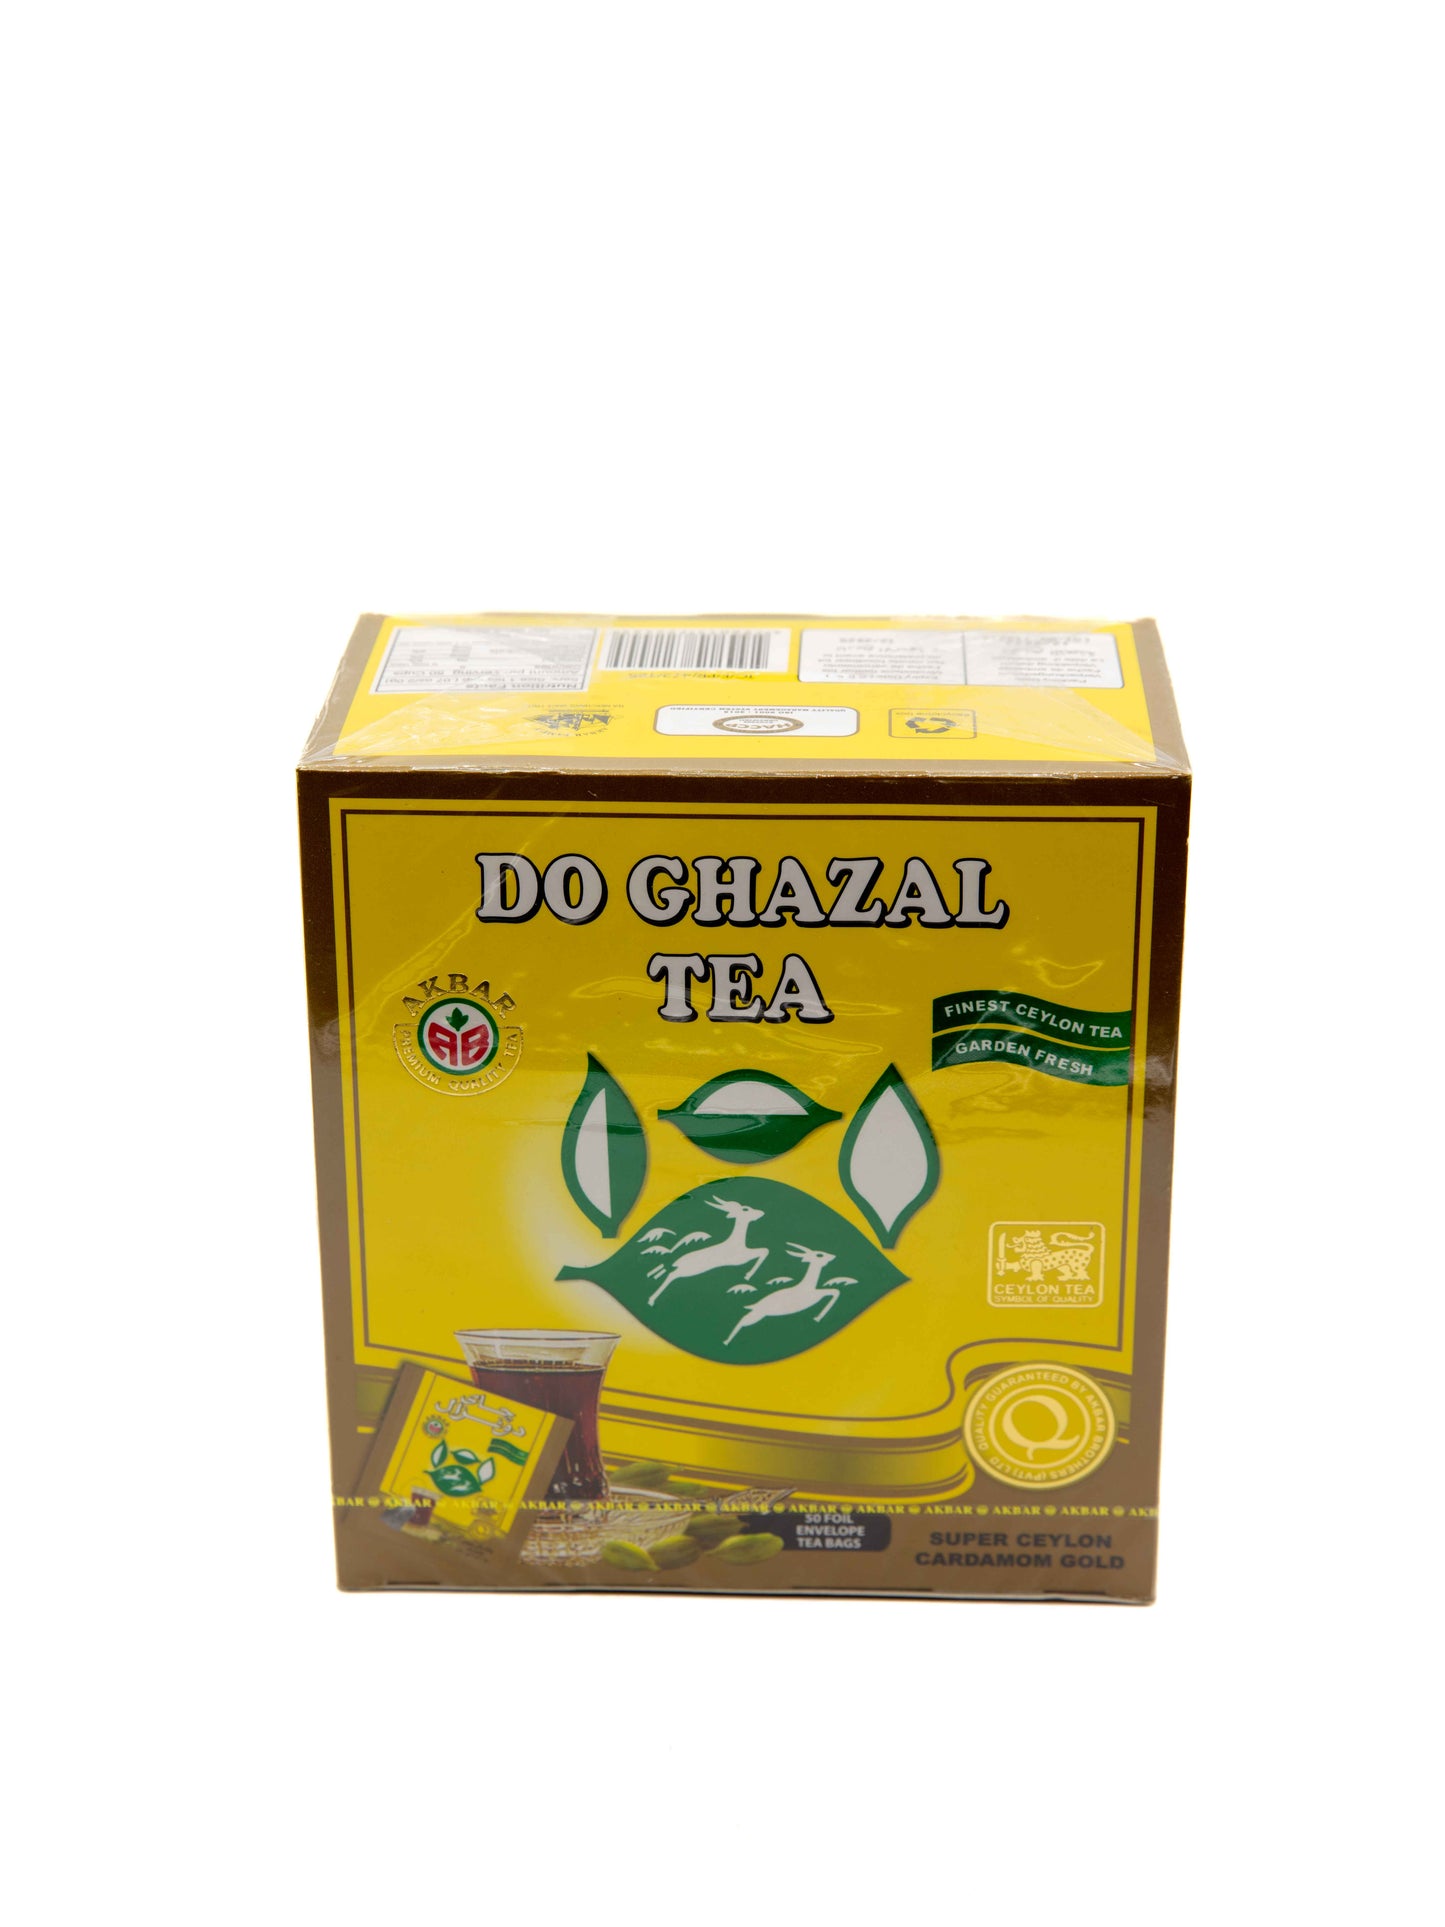 Do Ghazal Tea with Cardamom Flavor (50 Enveloped Tea Bag)